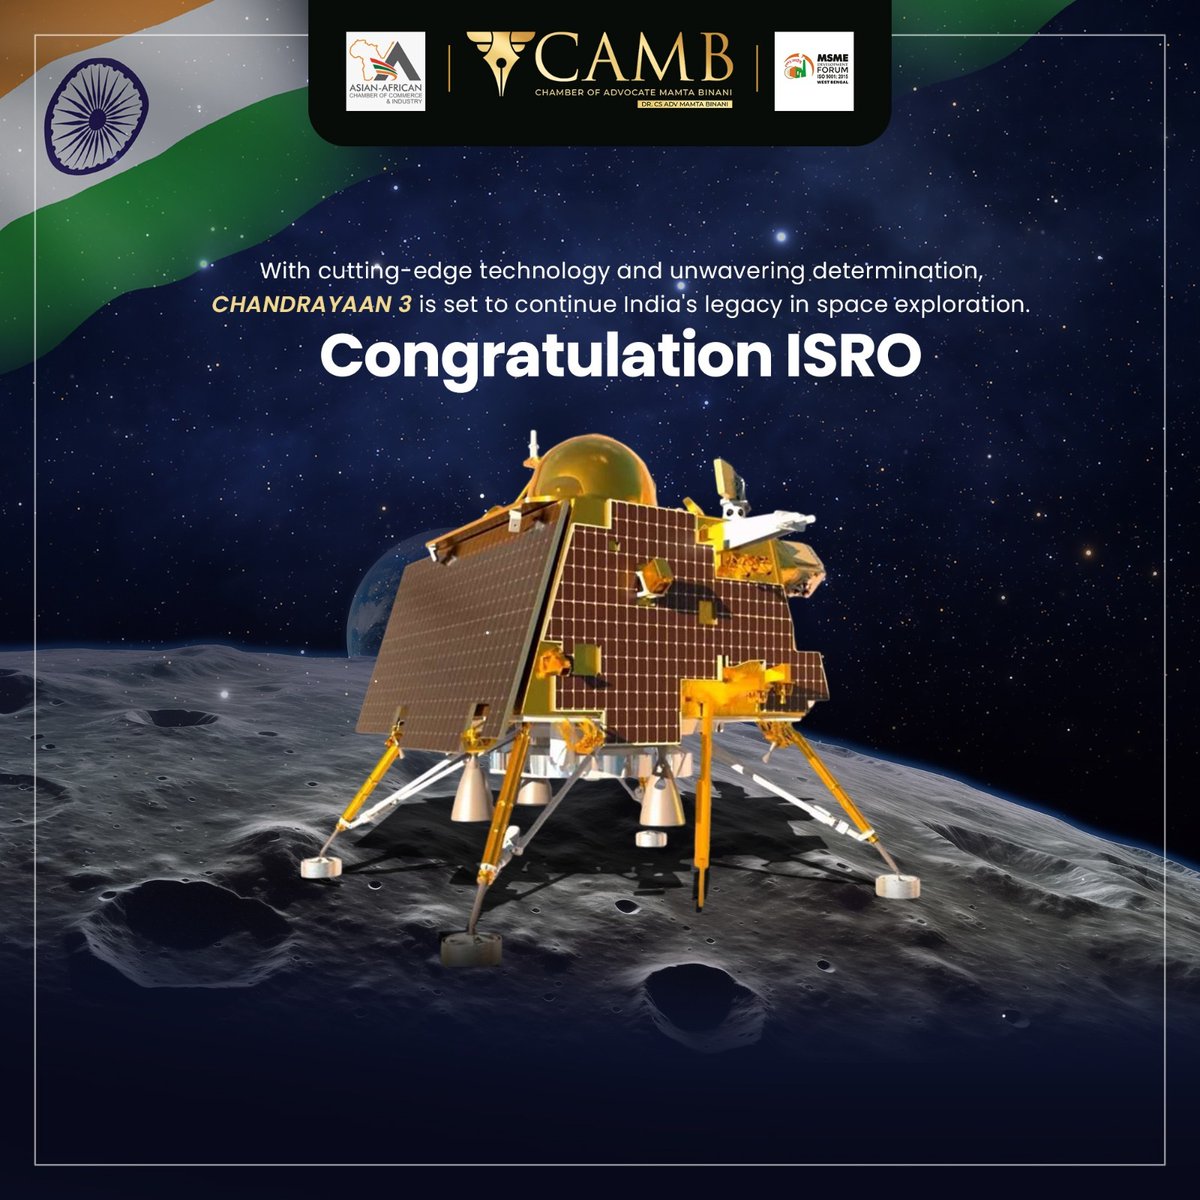 Saluting the Spirit of Exploration and Innovation.

#DrMamtaBinani #Motivation #Inspiration #ISRO #Chandrayaan3 #ProudMoment #SpaceMilestone #ExploringTheCosmos #ISROAchievements #IndiaInSpace #InnovationUnleashed